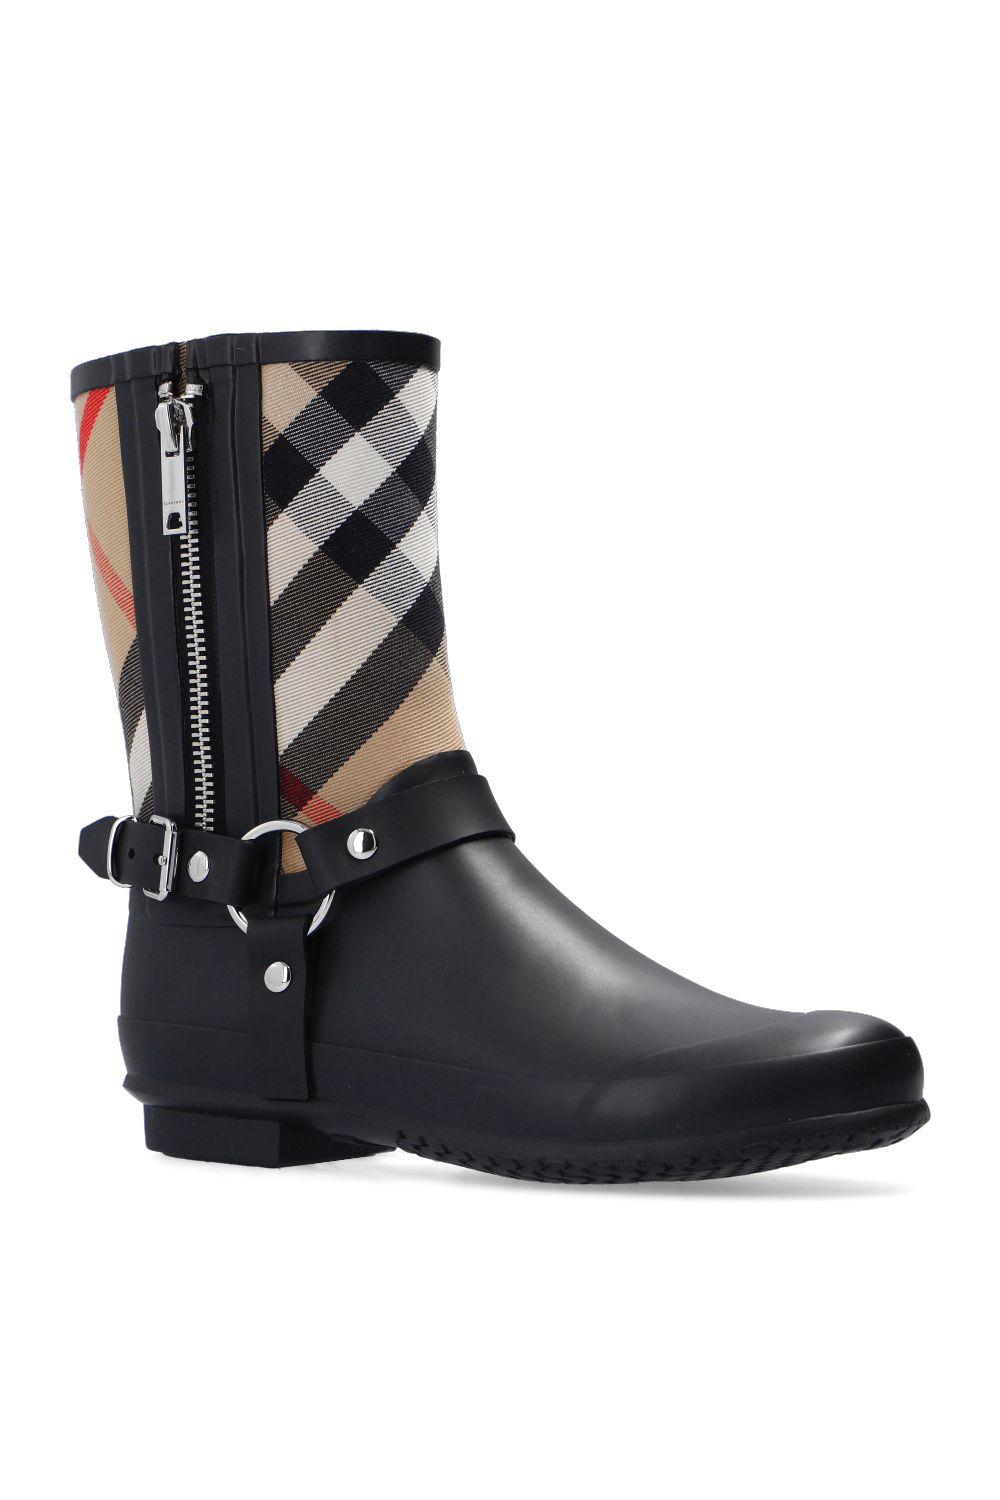 Burberry 'House Check' rain boots | Women's Shoes | Vitkac